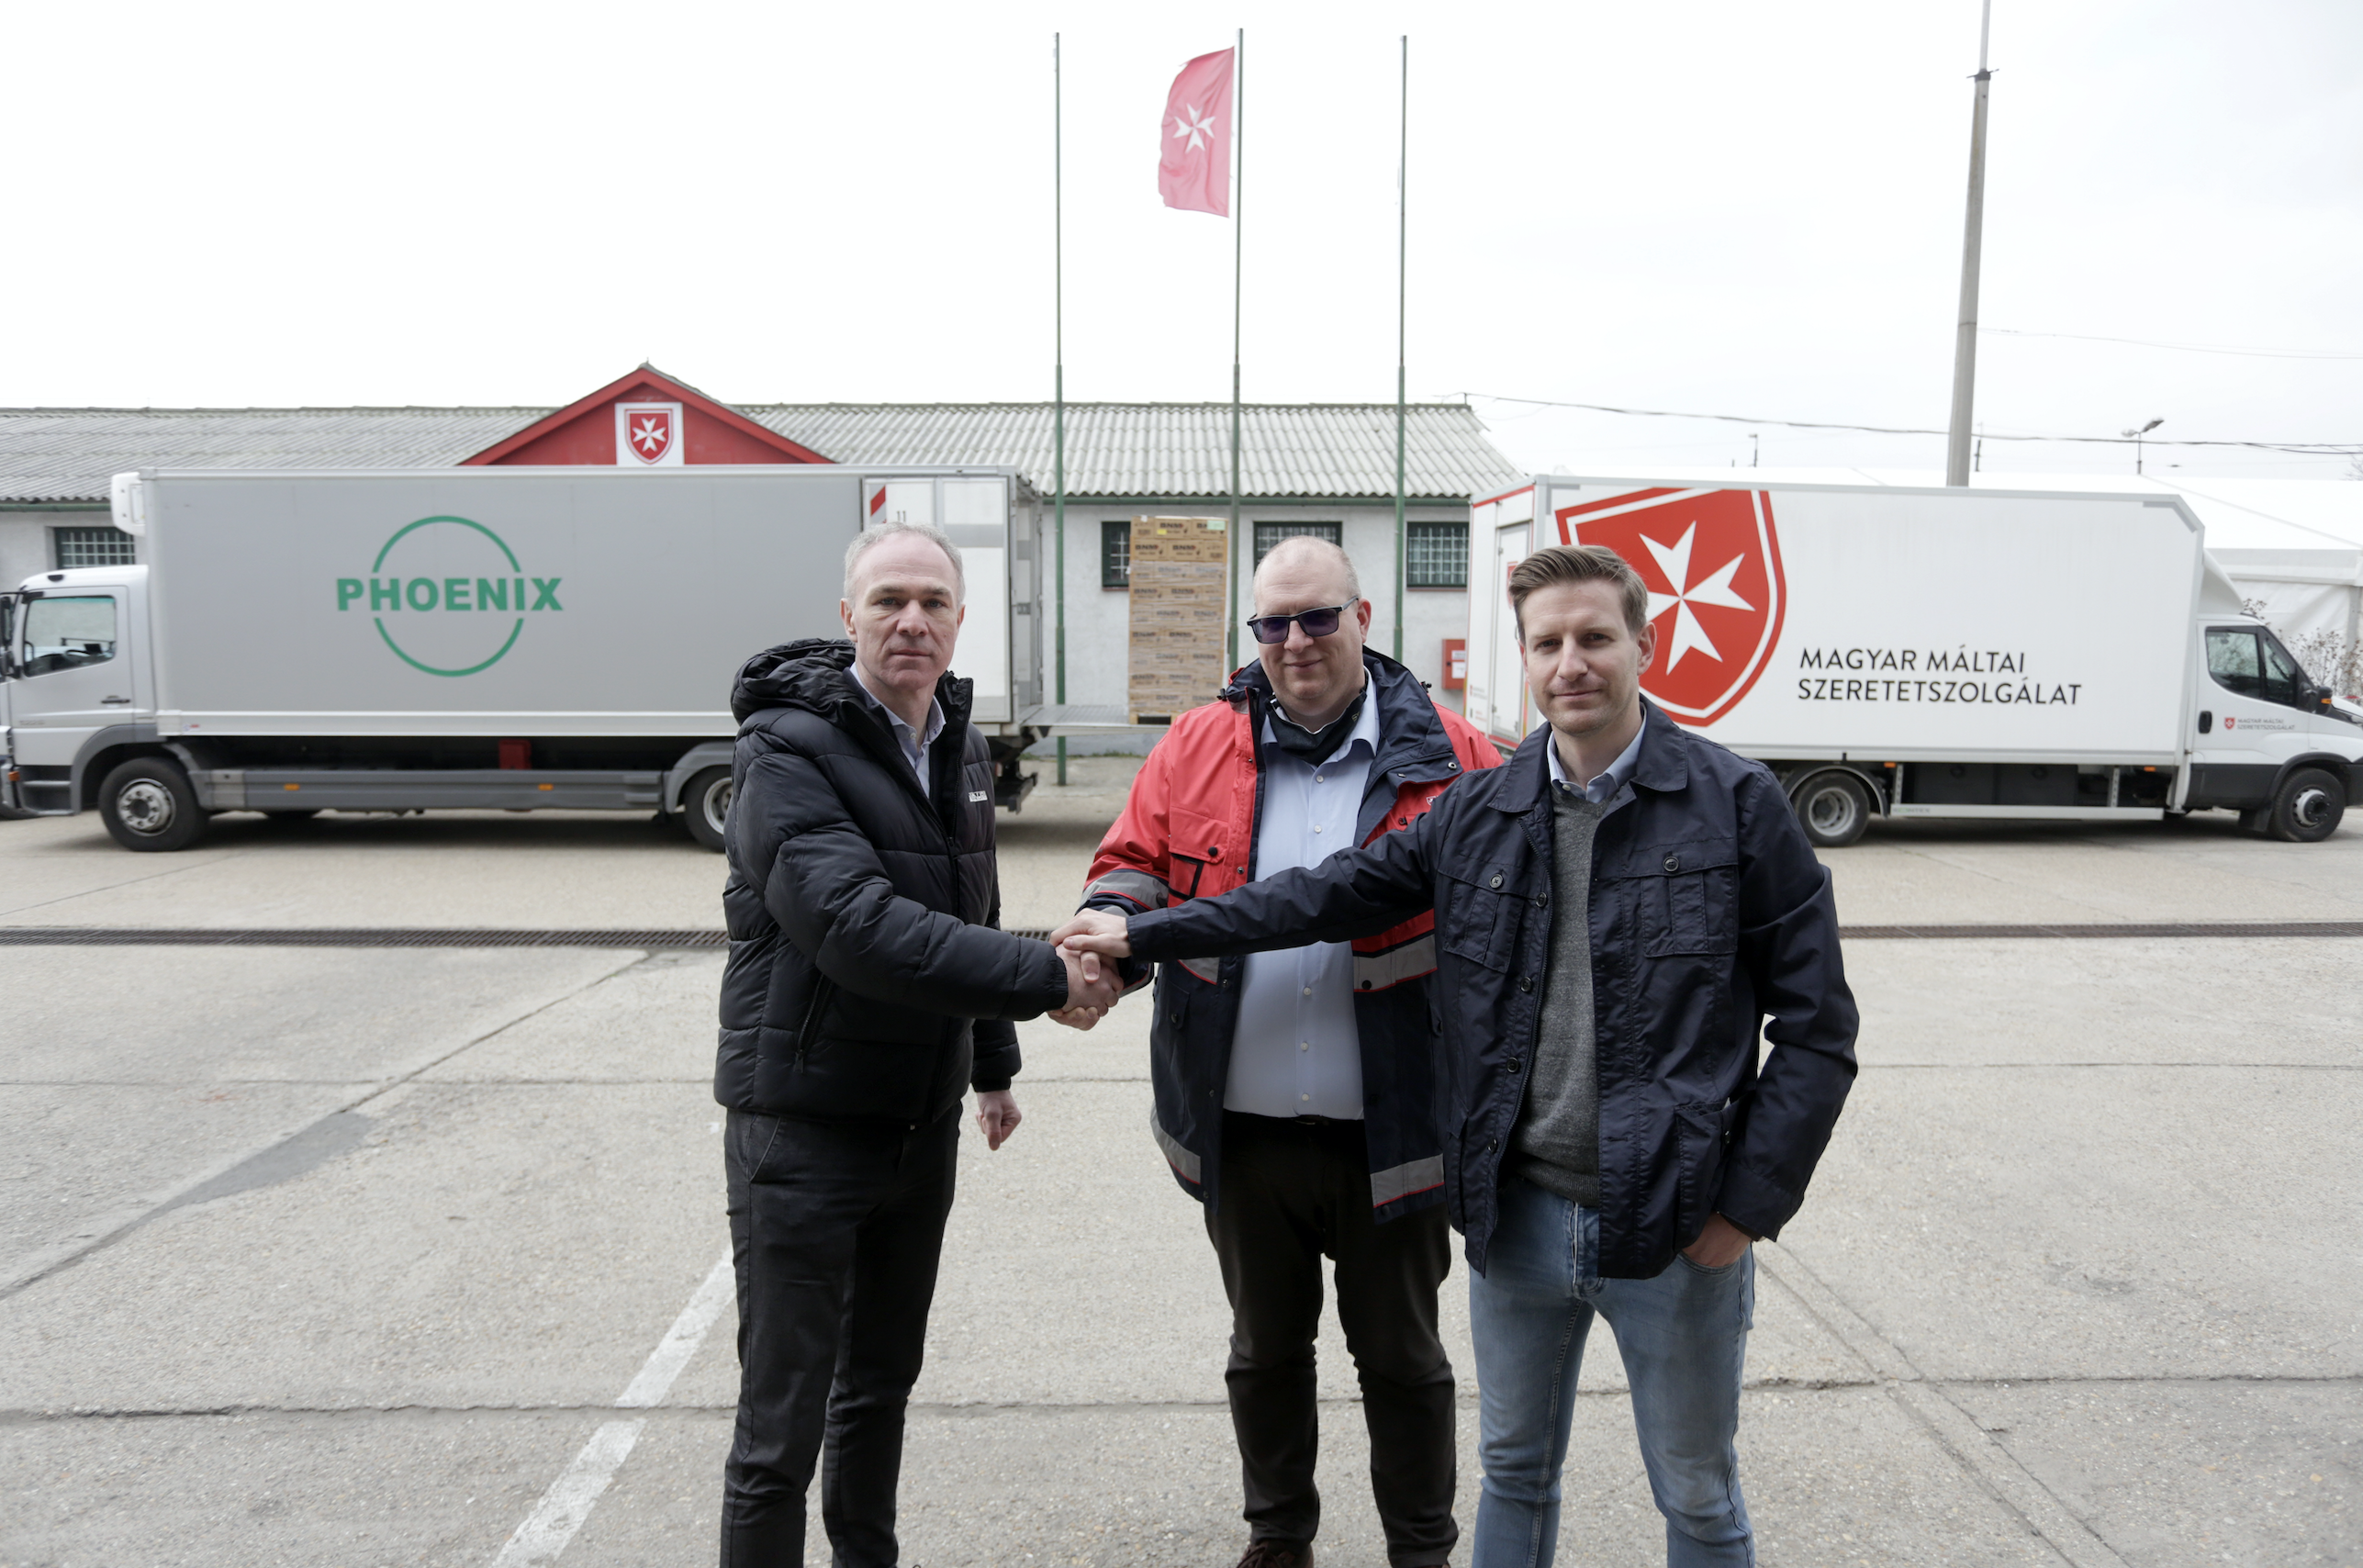 Ukraine Crisis: Phoenix Hungary donates medicine to refugees